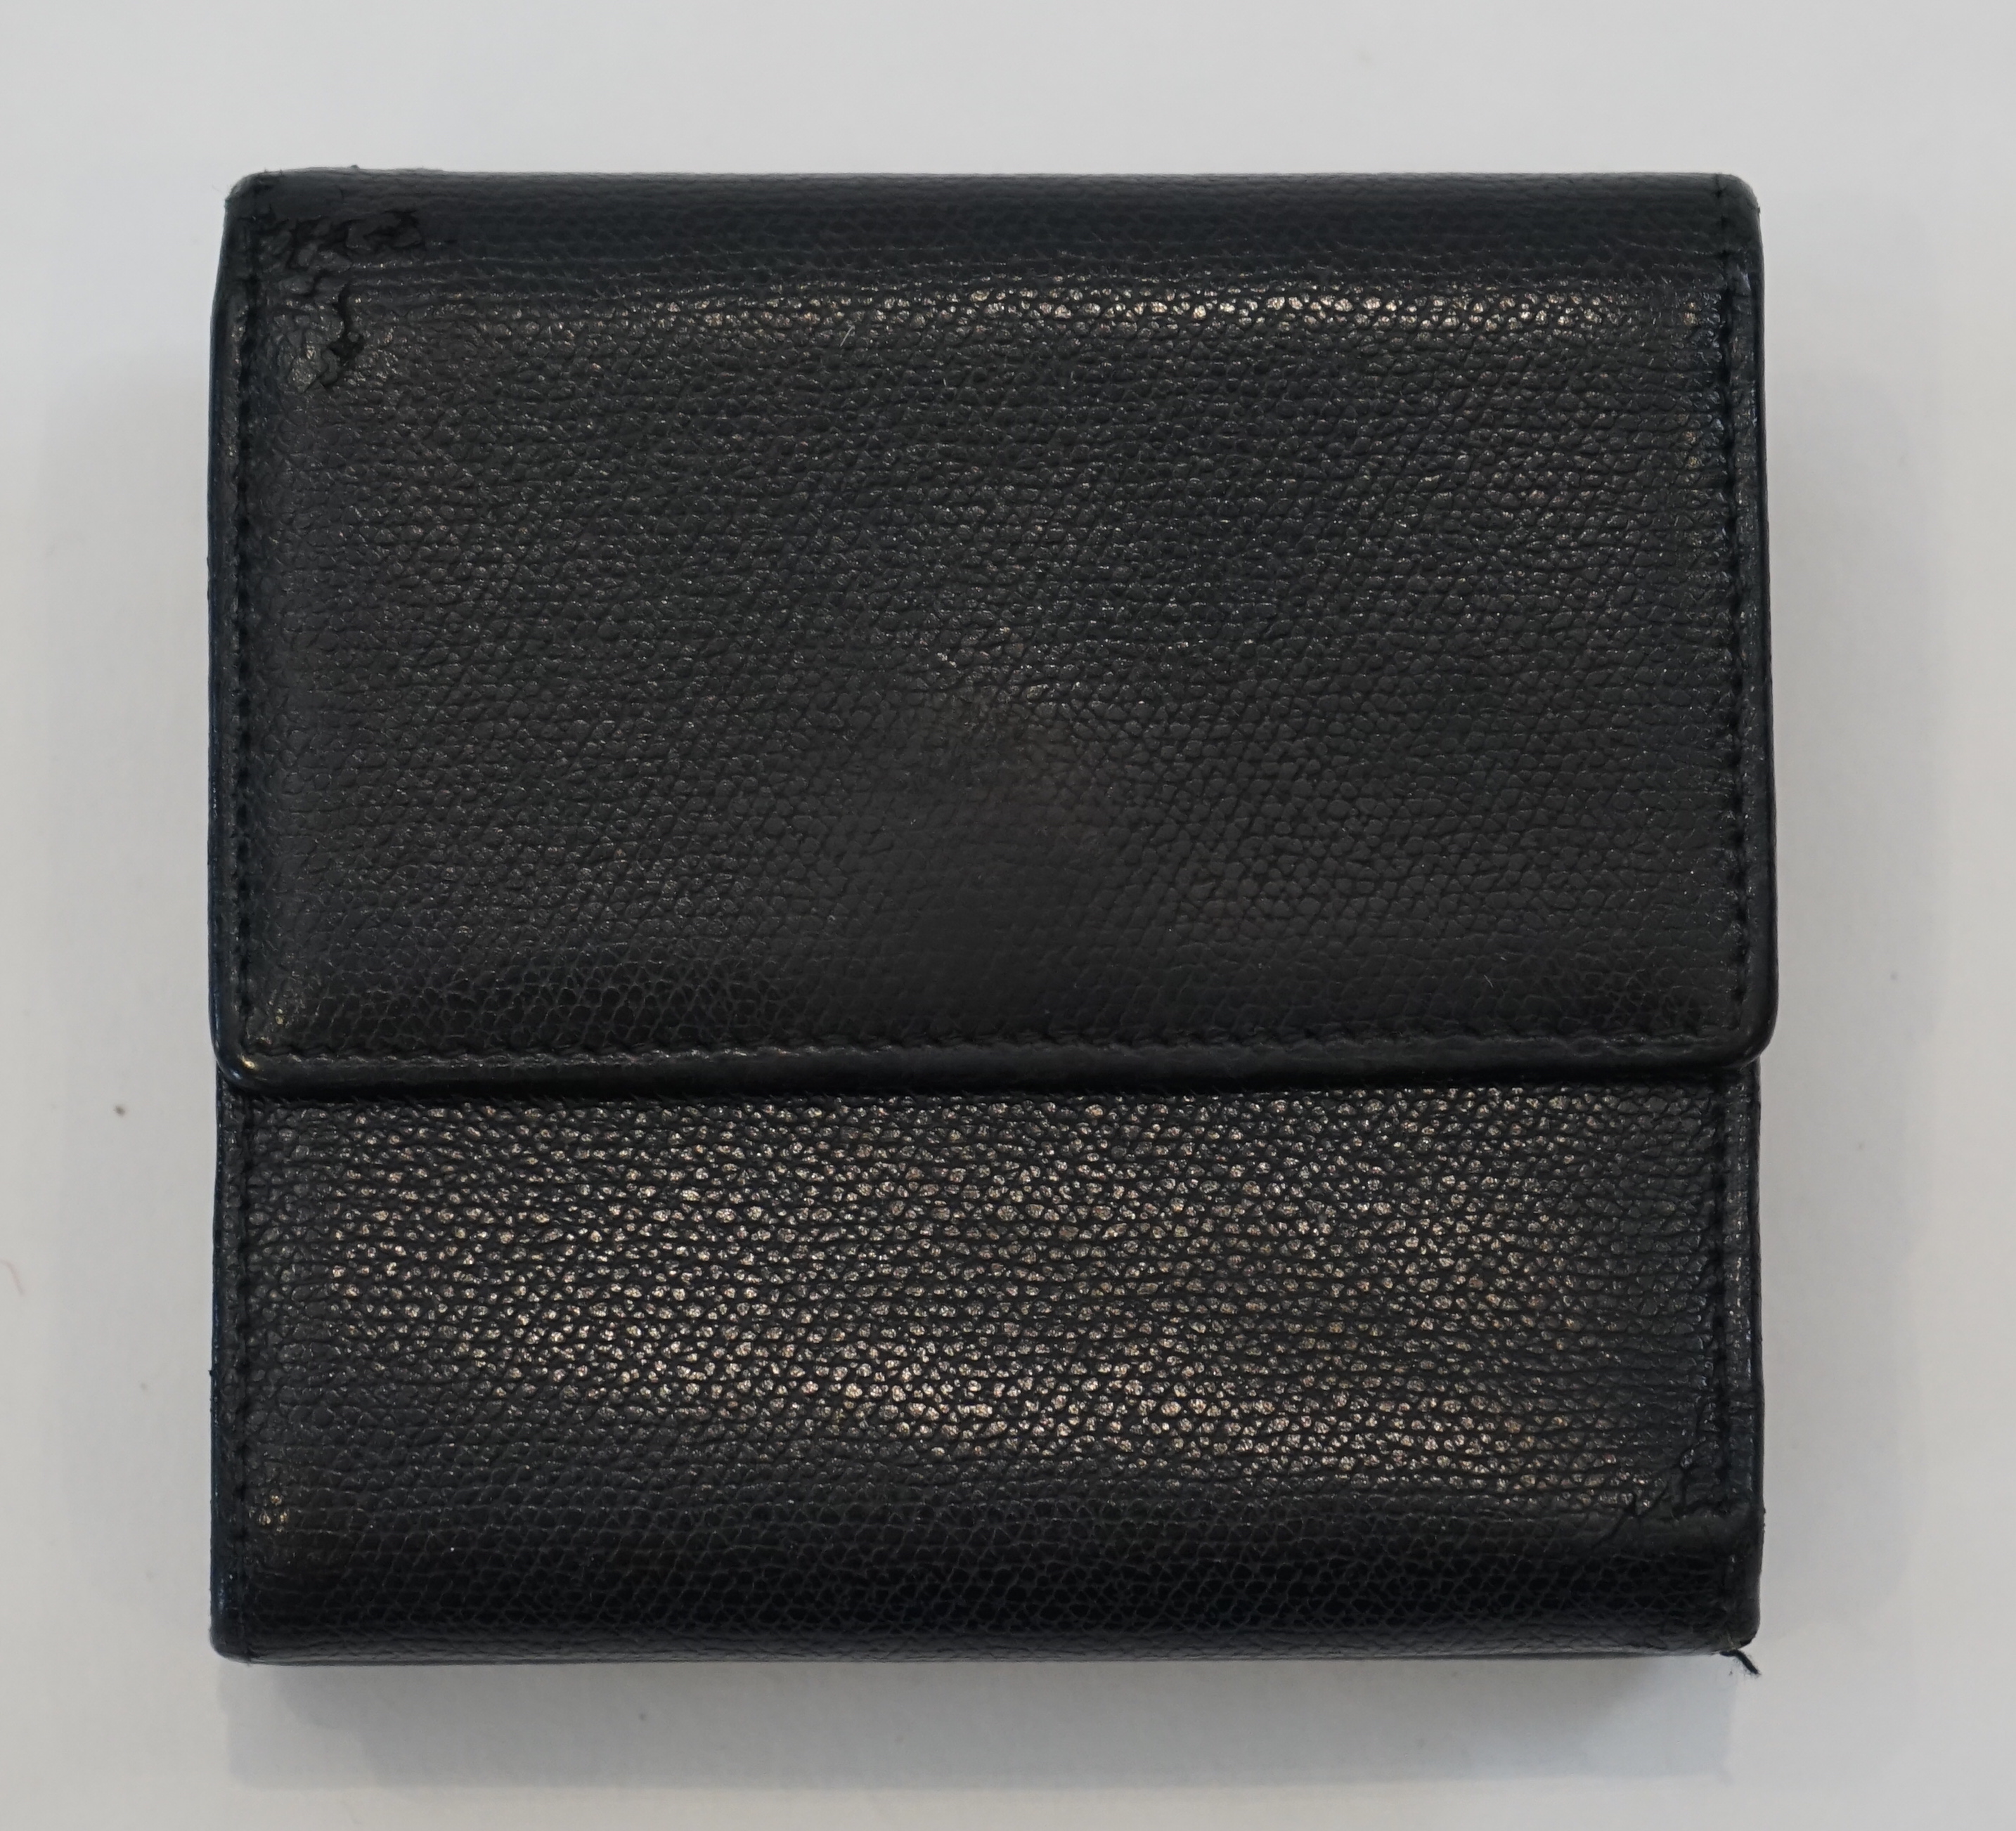 A Chanel black leather folded wallet width 10cm, depth 2cm, height 9.5cm